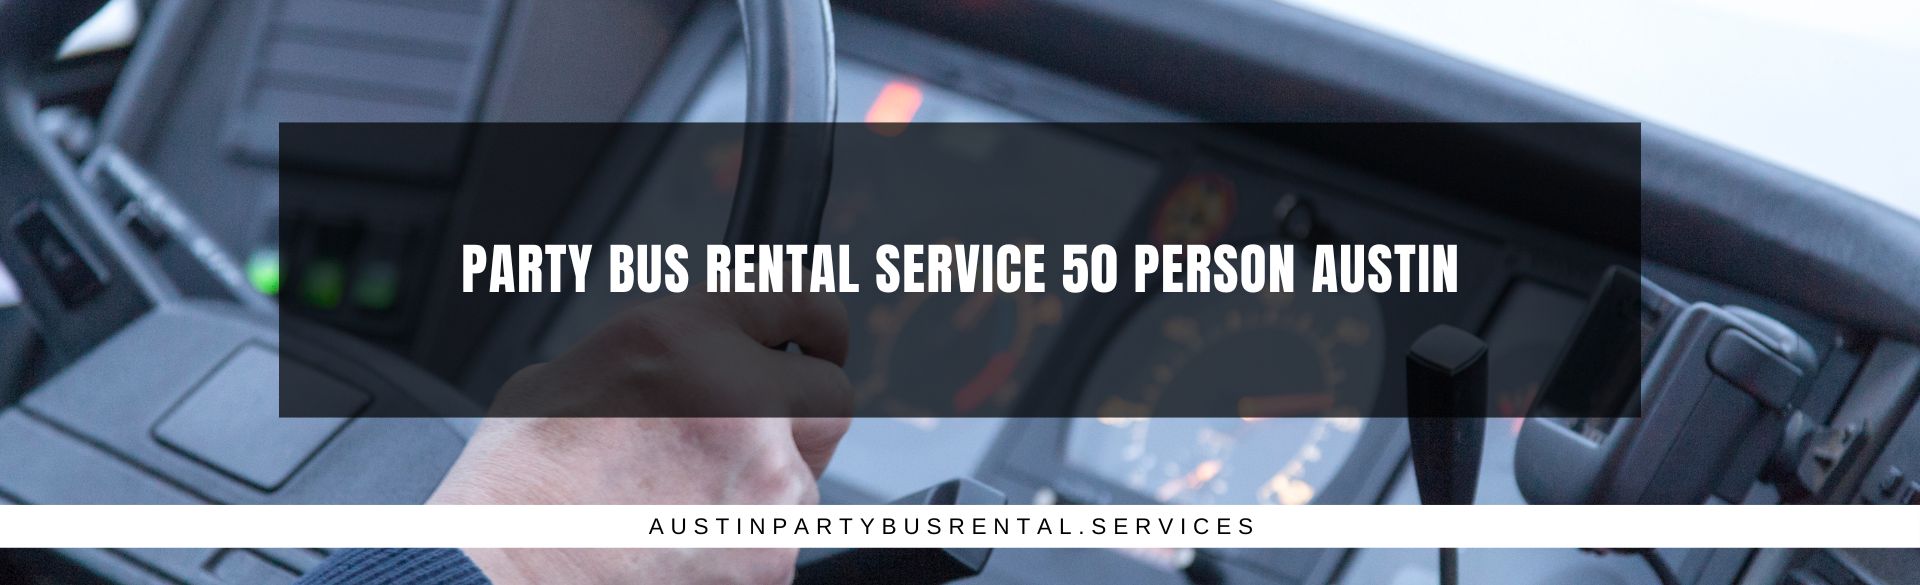 Party Bus Rental Service 50 Person Austin